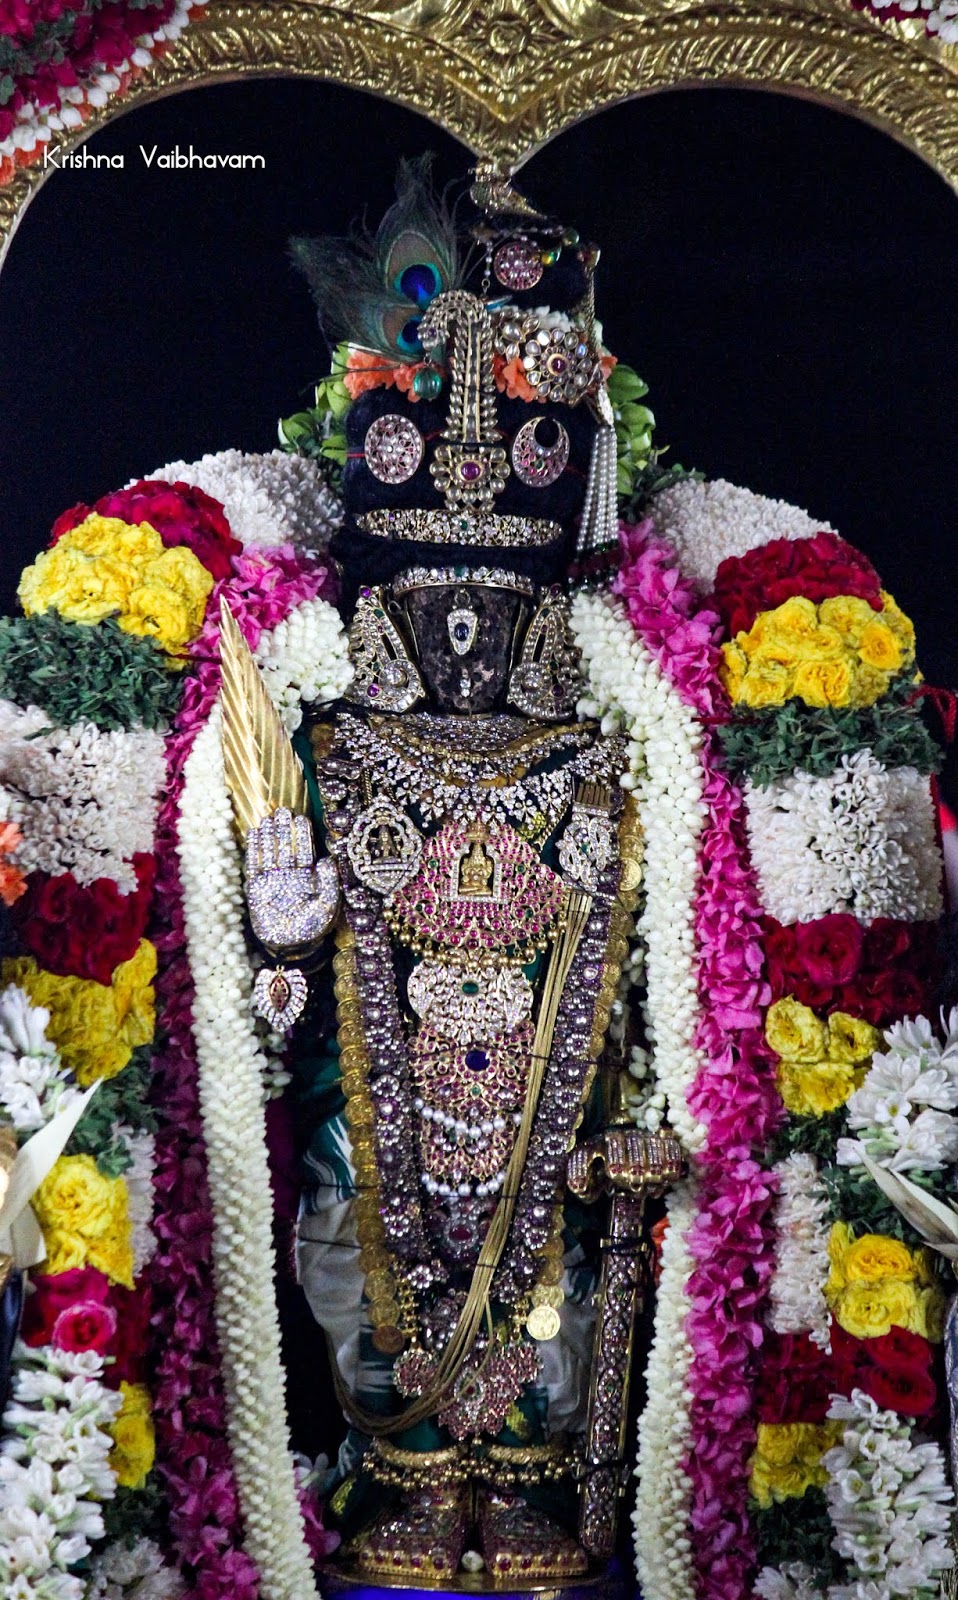 Krishna Vaibhavam: Sri Parthasarathy Perumal - Day 02 Theppotsavam ...